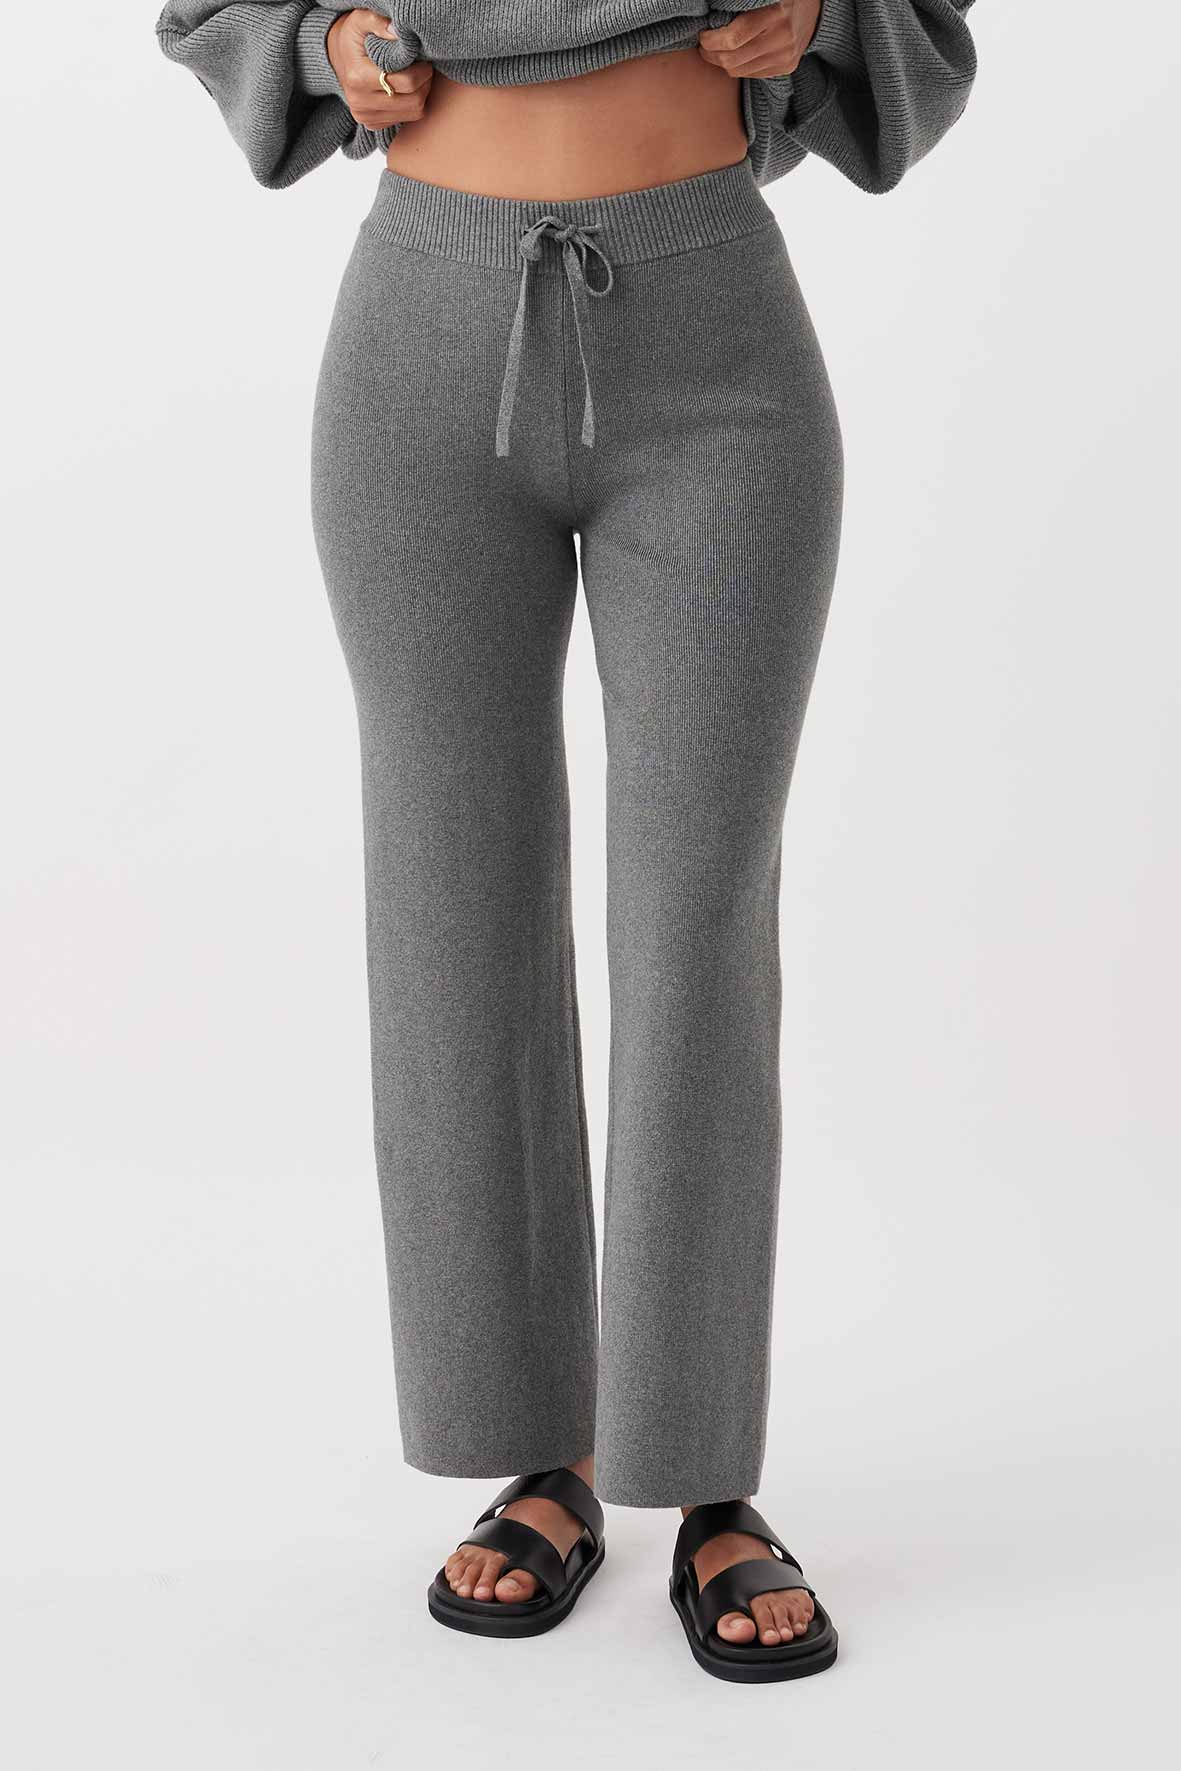 Noa Organic Knit Pant - Dark Grey Marle